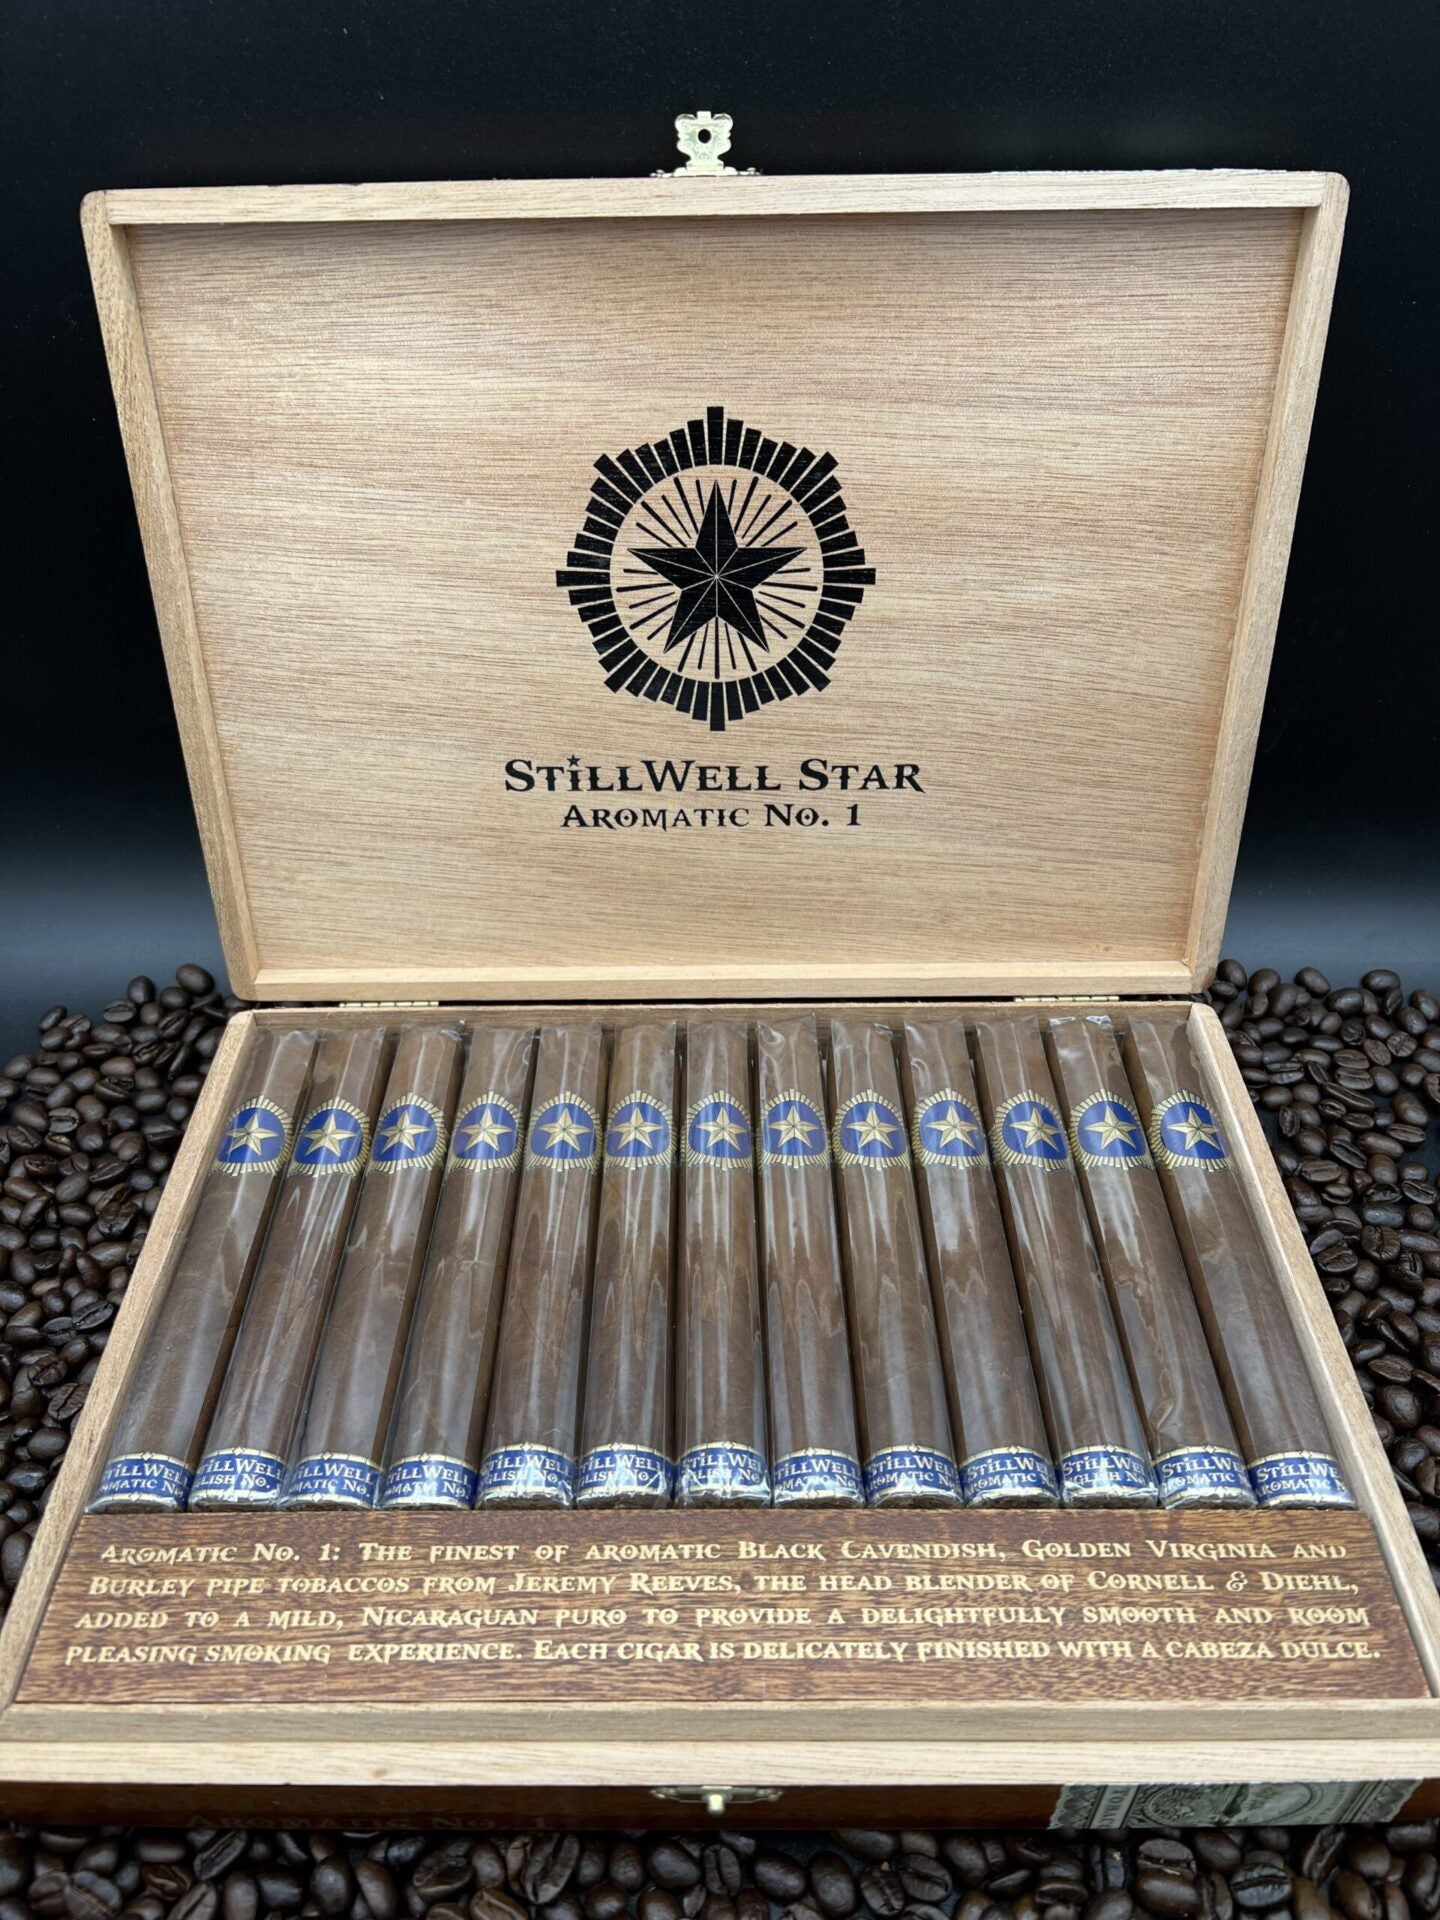 Dunbarton Tobacco & Trust-Stillwell Star Aromatic No. 1 cigars supplied by Sir Louis Cigars